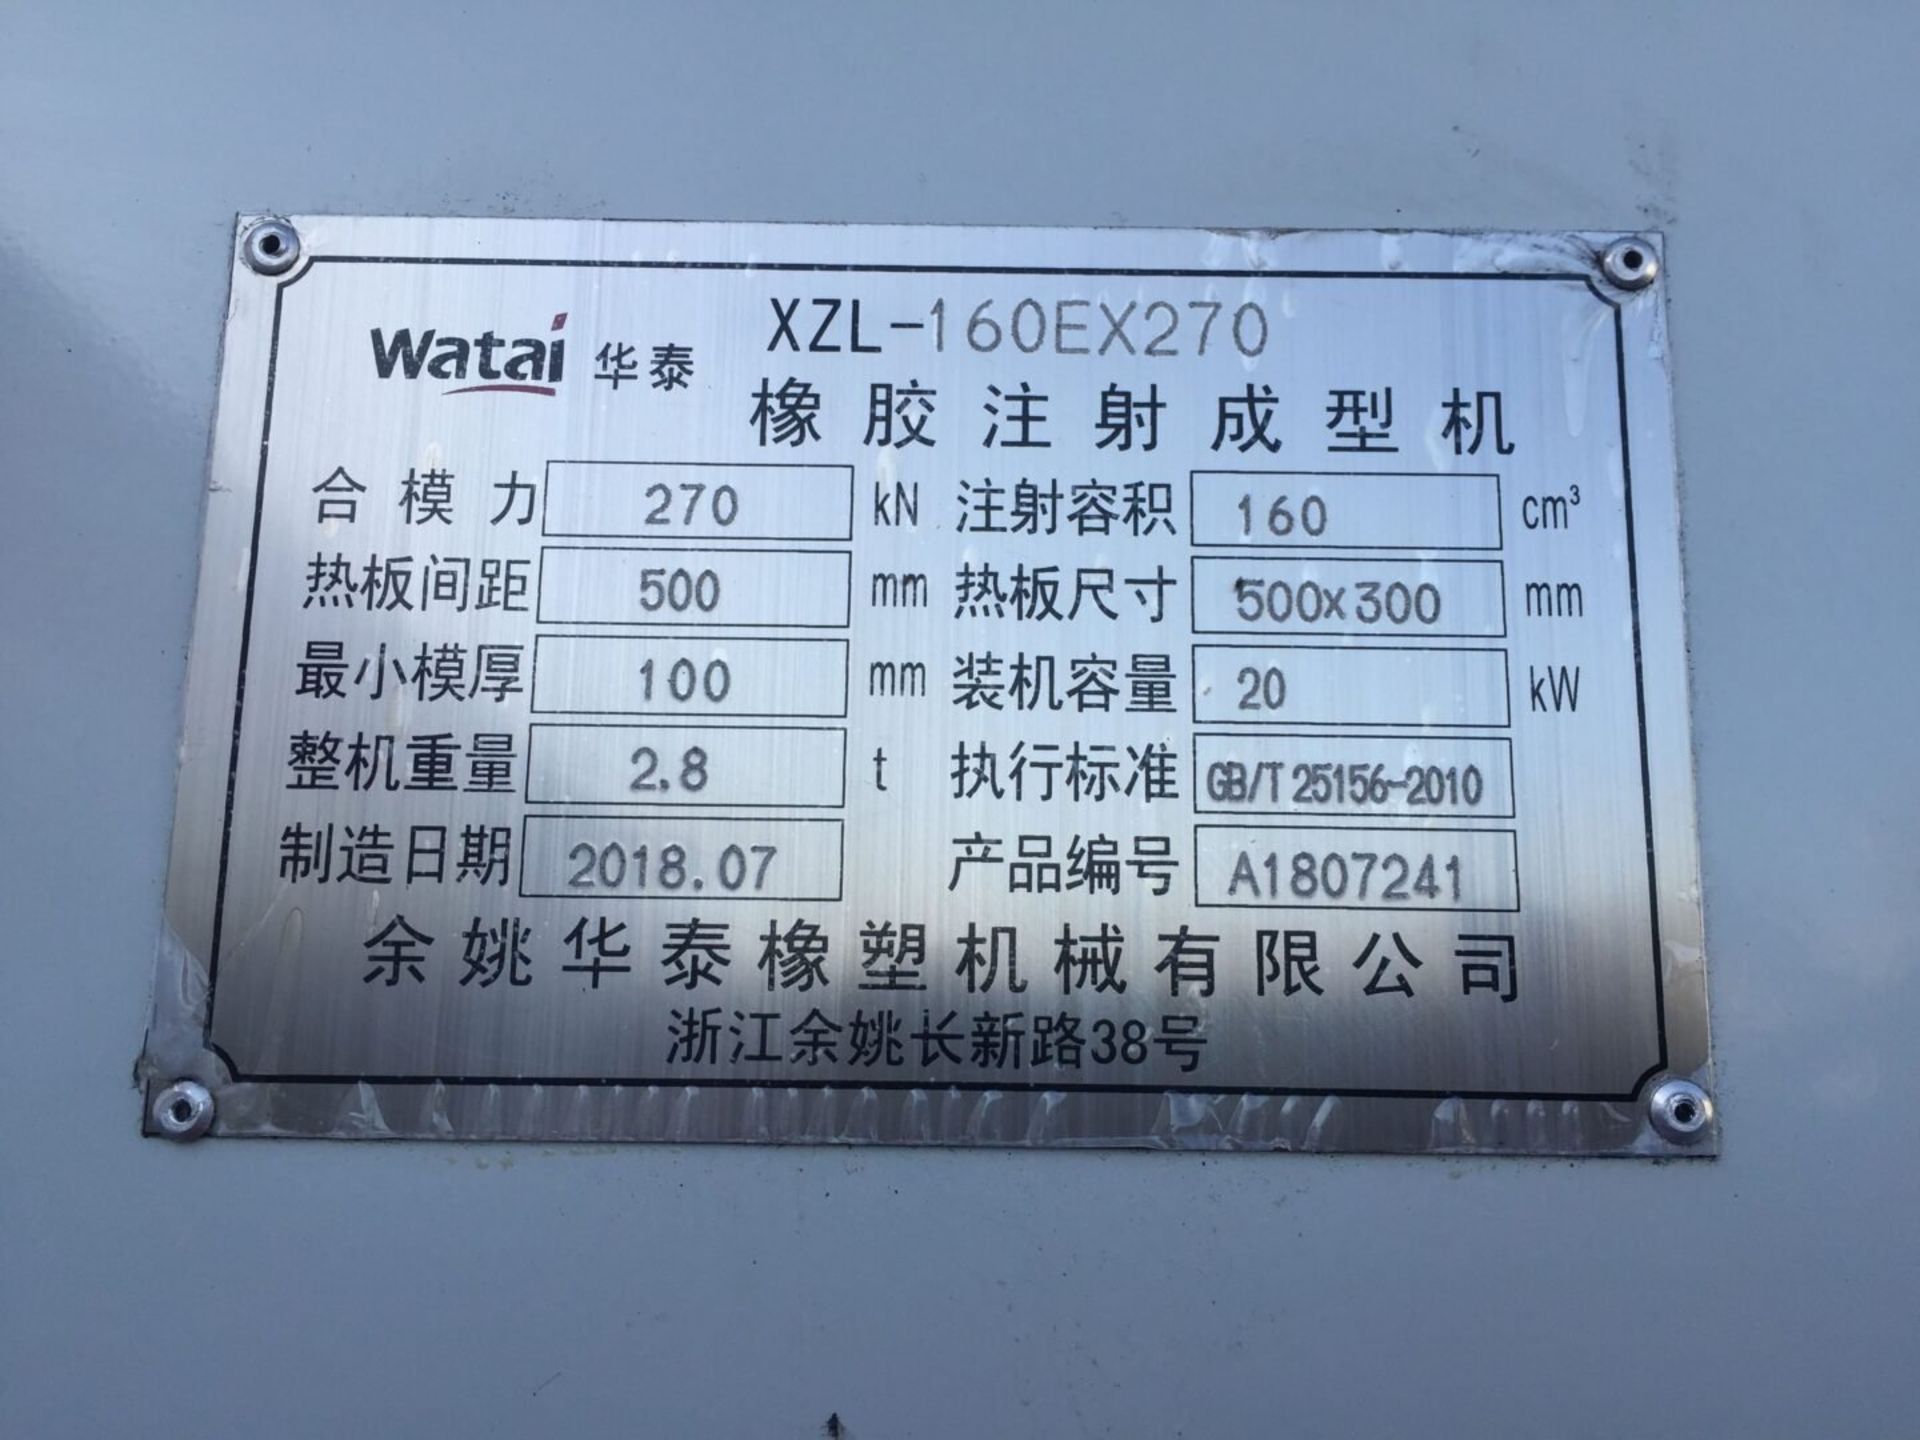 Watai XZL-160EX270 Rubber Injection Molding Machine, 2018 - Image 7 of 19